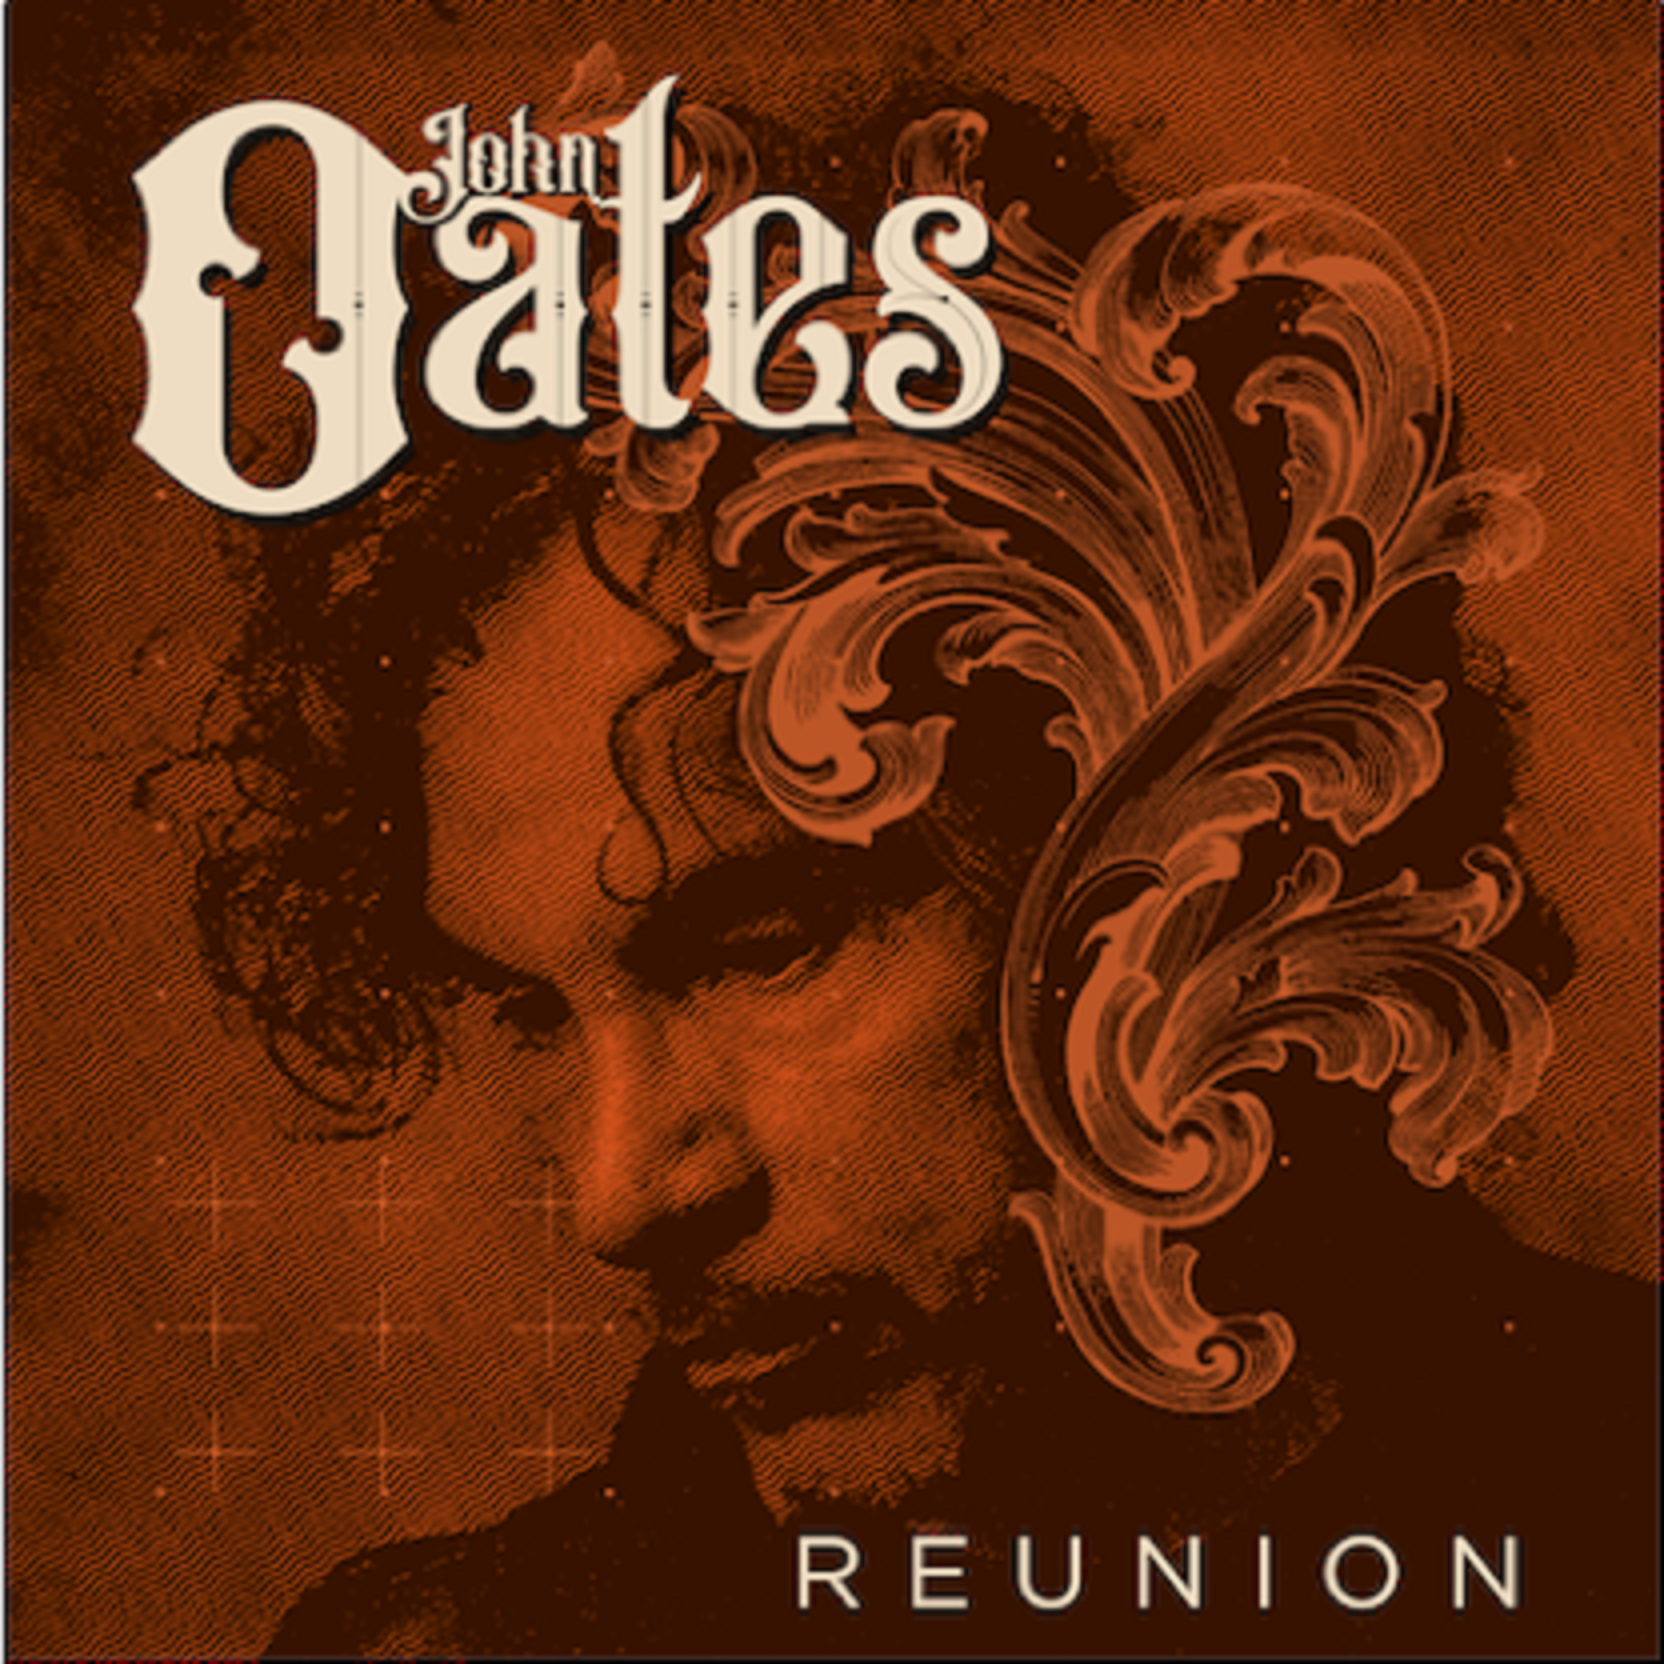 JOHN OATES Releases His New Album Reunion